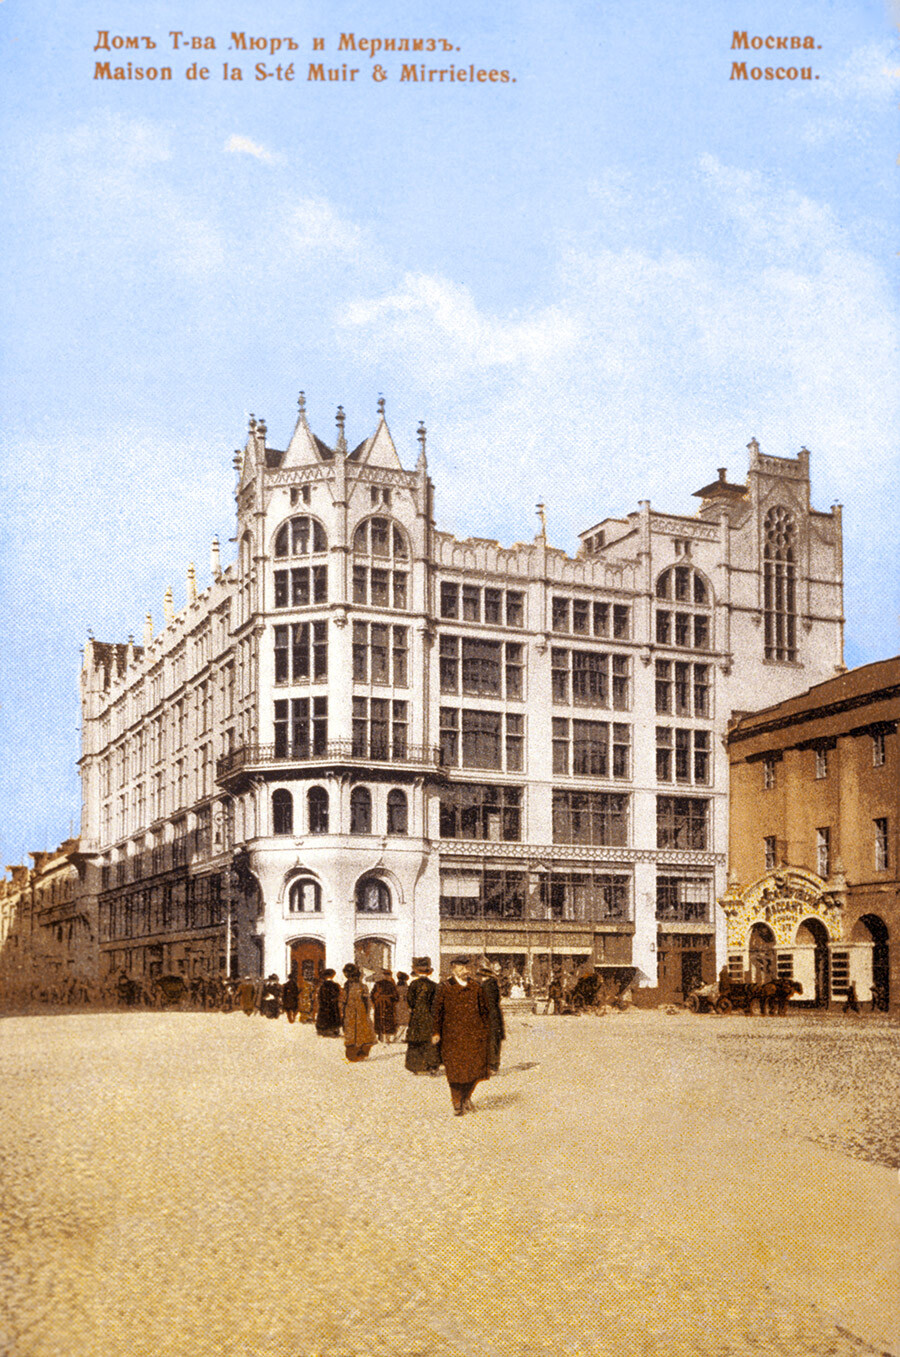 ‘Muir & Mirrielees’ department store gothic building